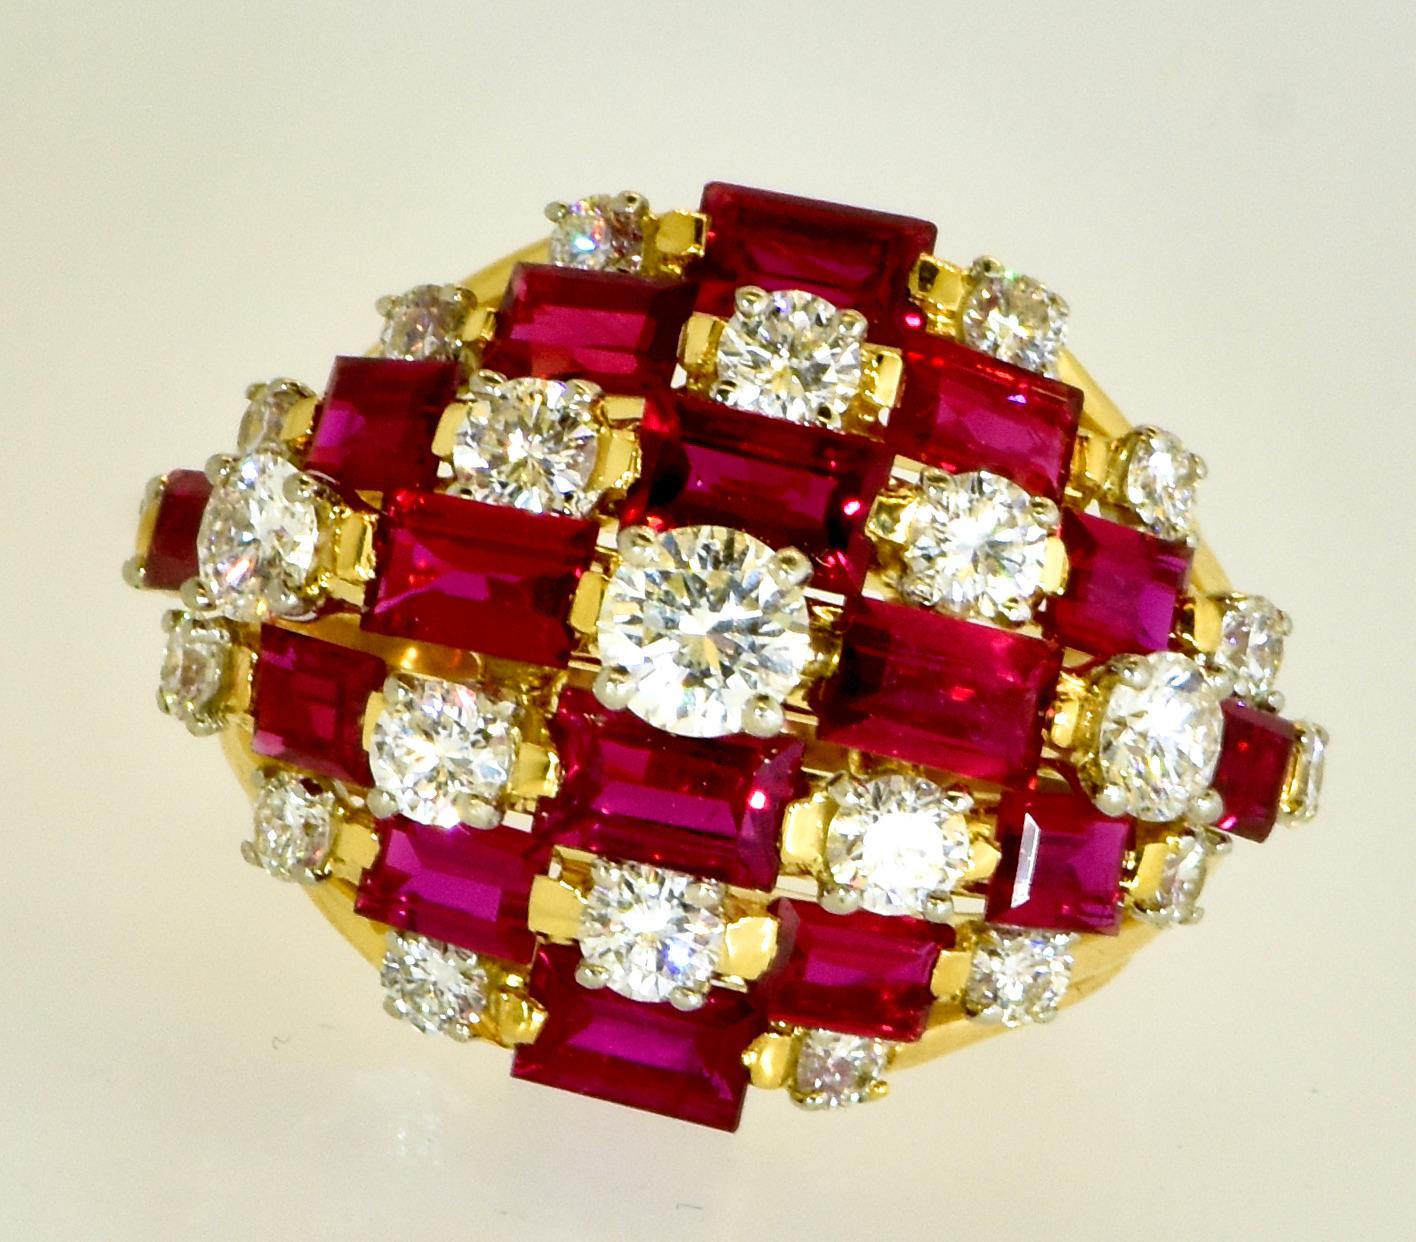 Contemporary Oscar Heyman Dramatic Large 7 Row Ruby and Diamond Vintage Ring